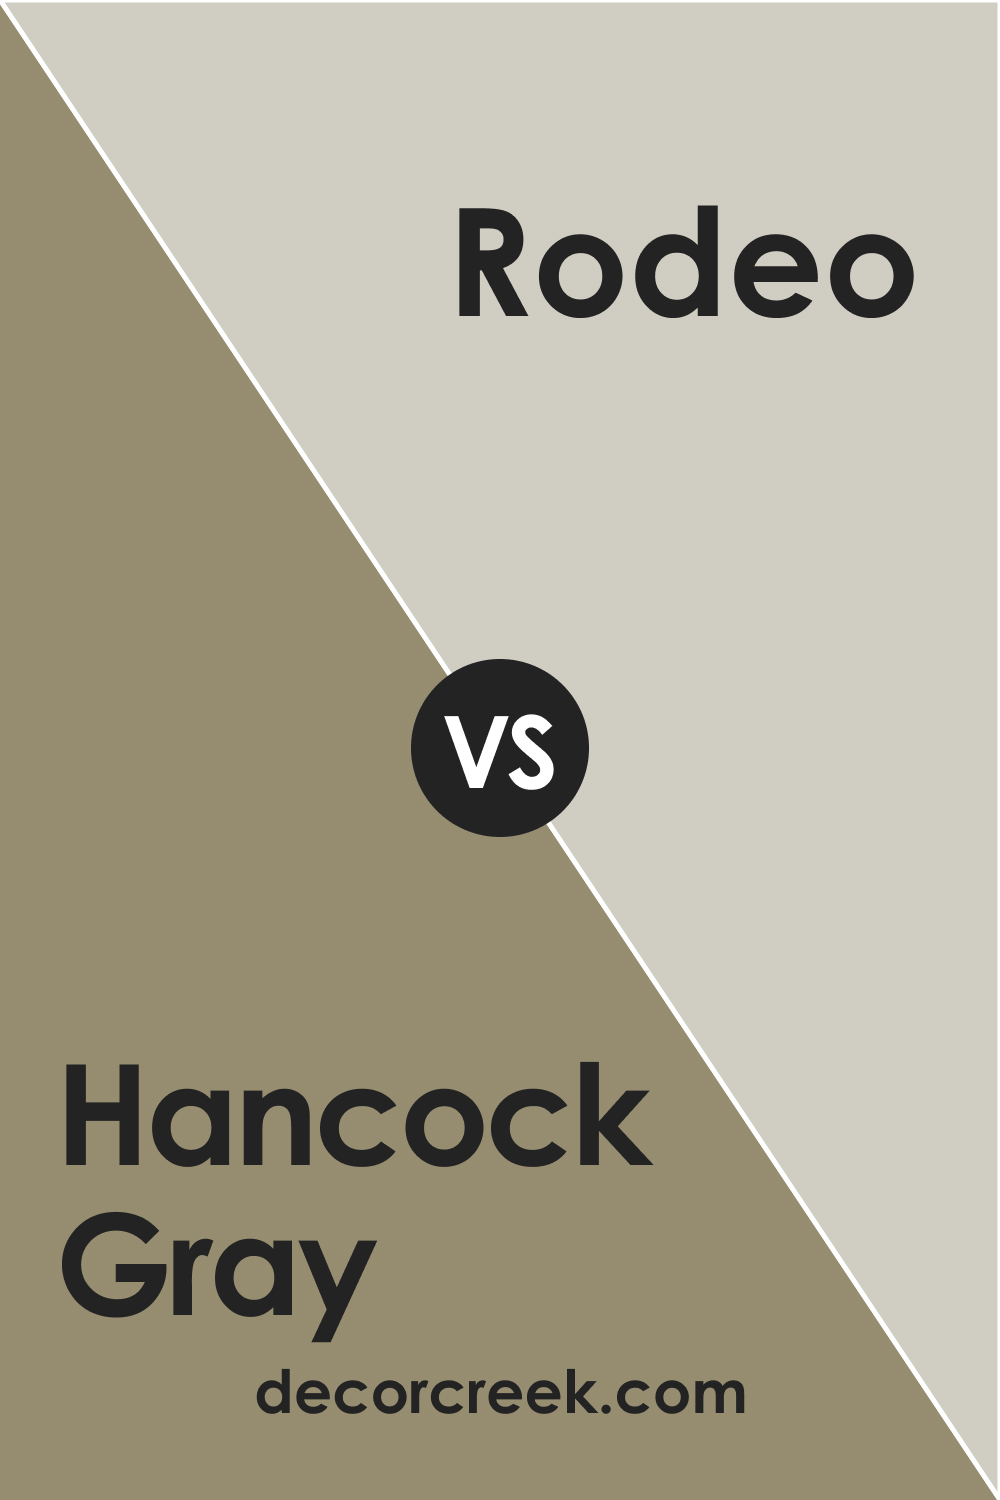 Hancock Gray HC-97 vs. BM 1534 Rodeo